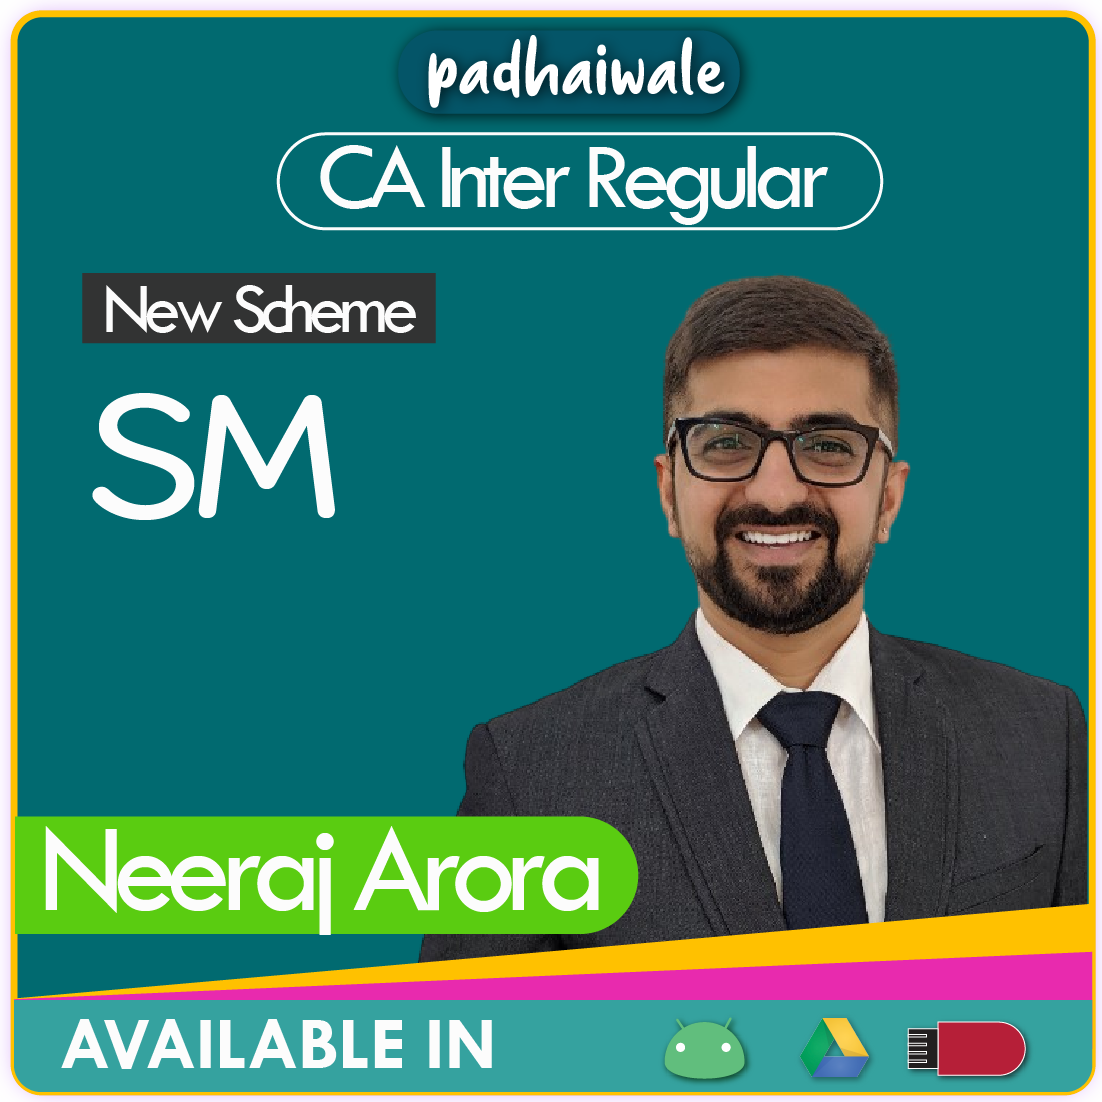 CA Inter SM New Scheme Neeraj Arora